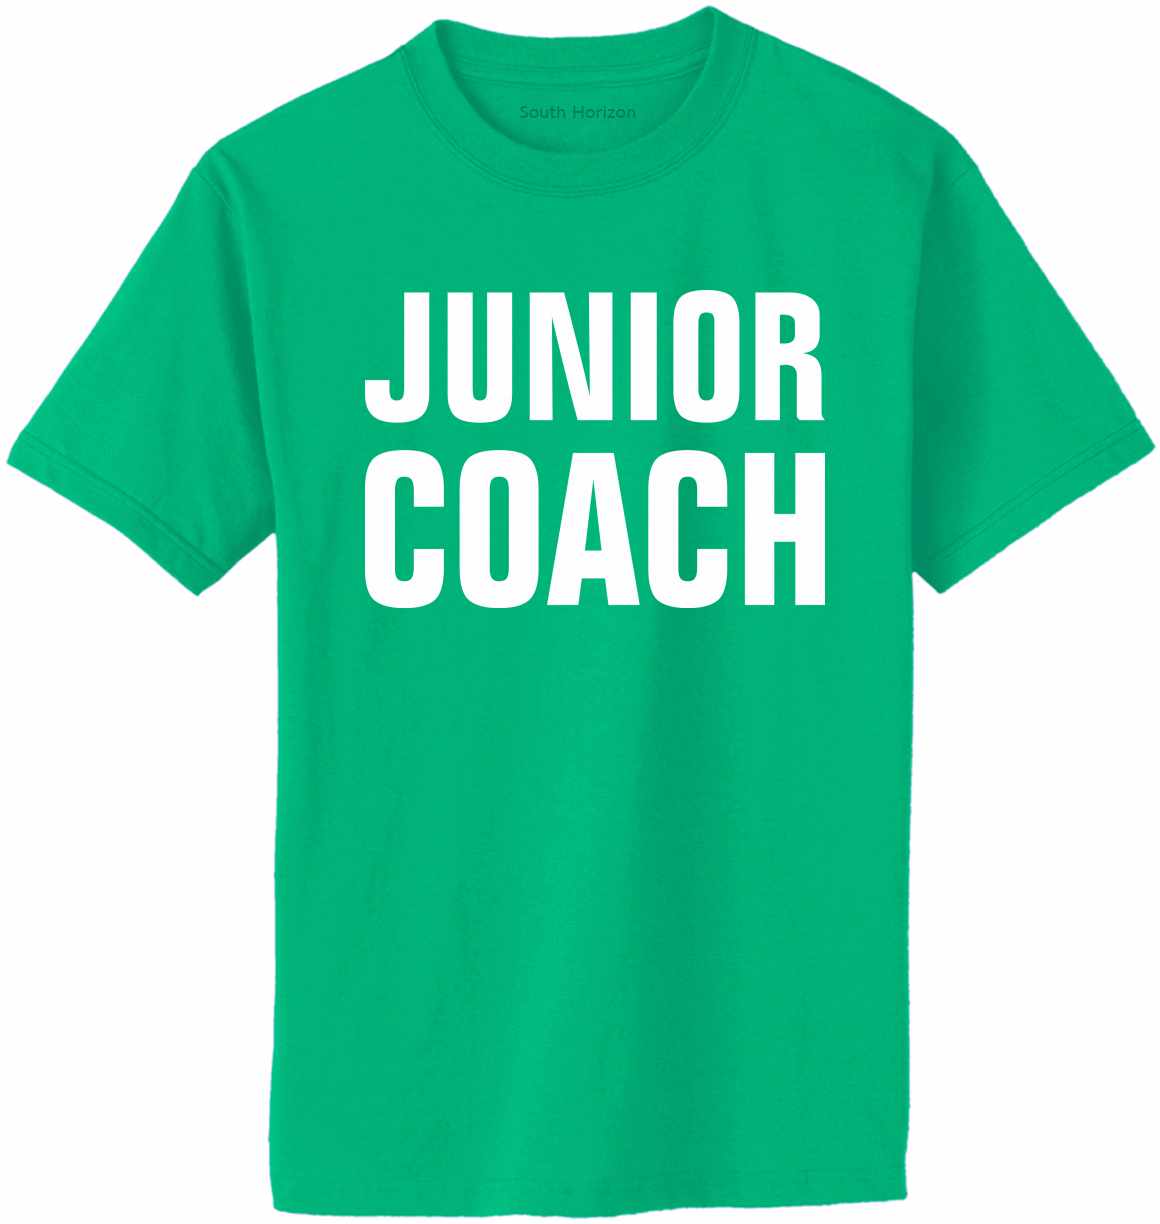 Junior Coach on Adult T-Shirt